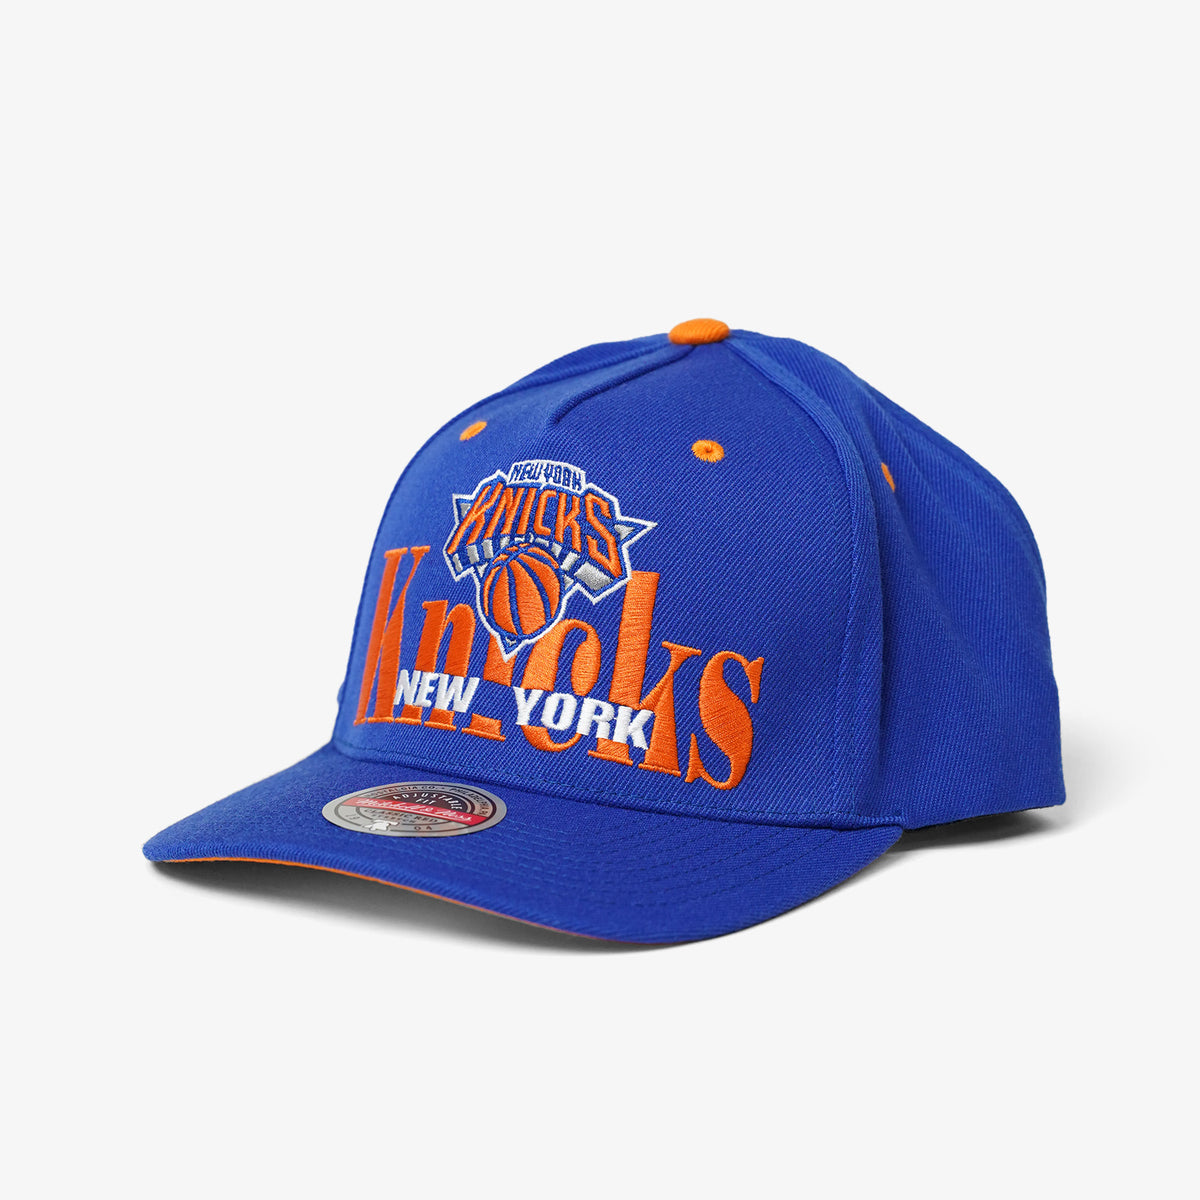 New York Knicks On Top Classic Redline Snapback - Blue